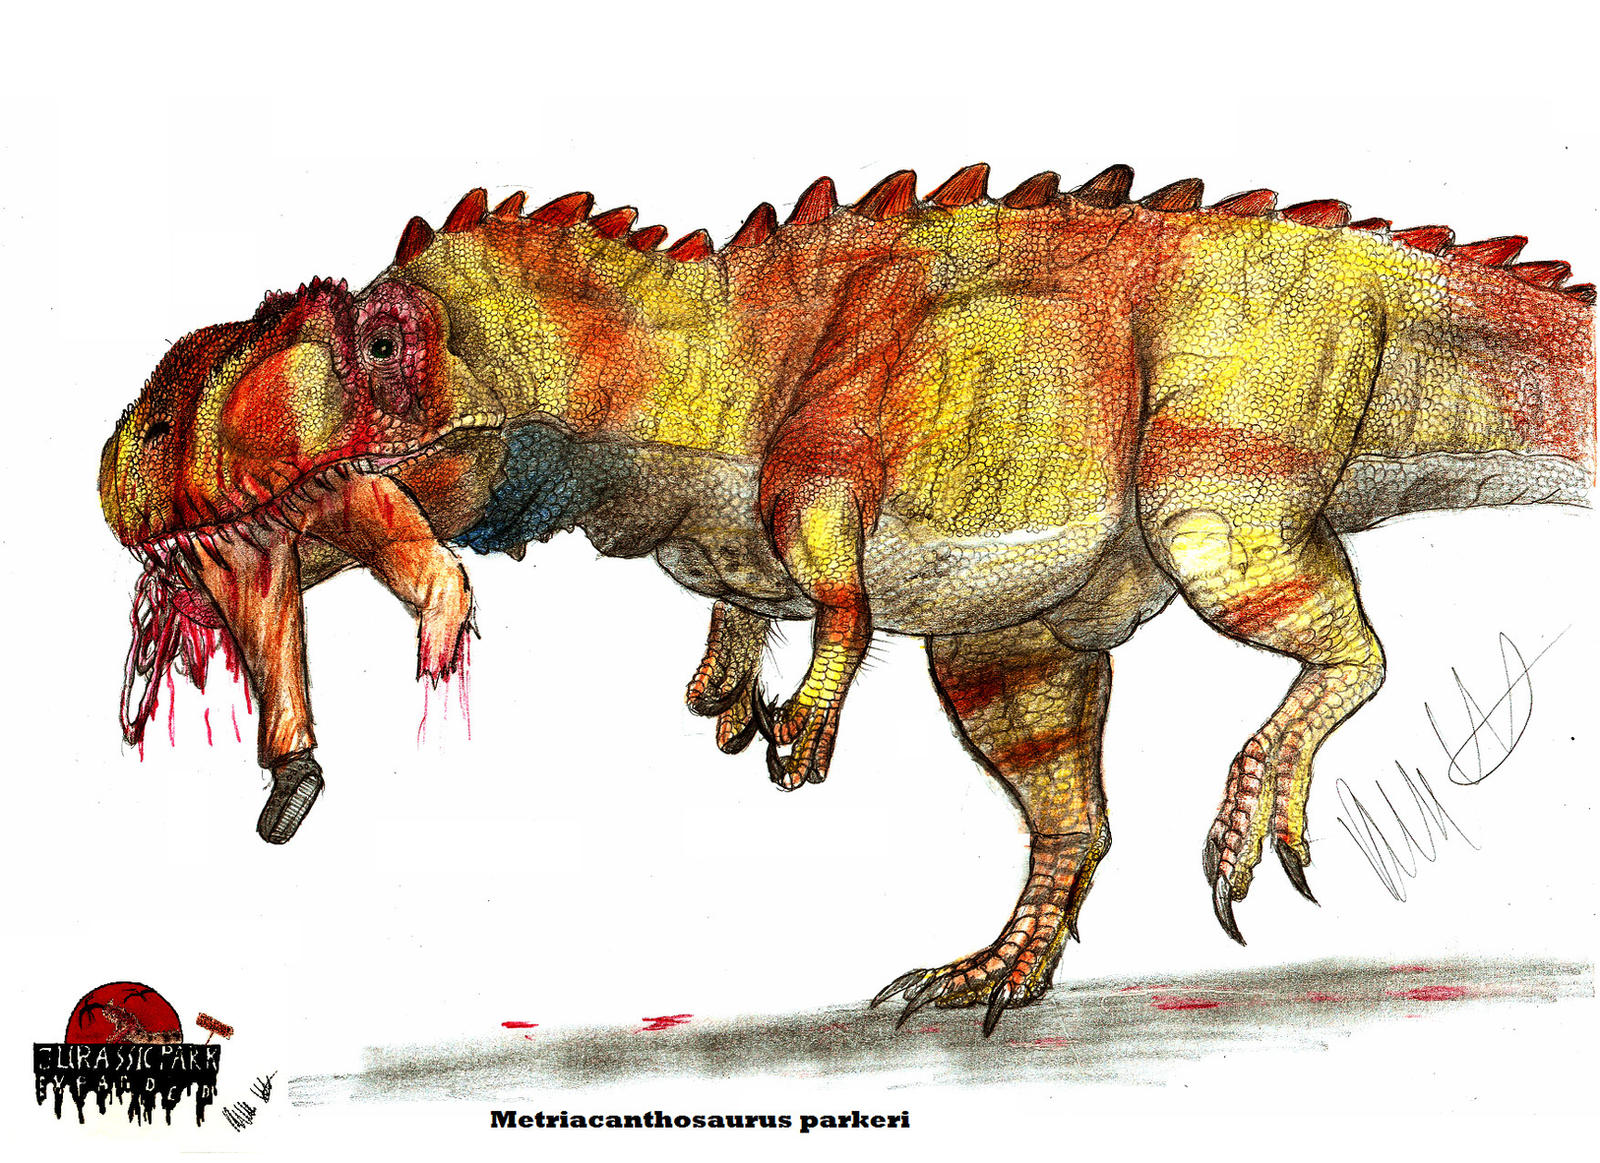 jp_expanded_metriacanthosaurus_by_teratophoneus-d5bsmd0.jpg